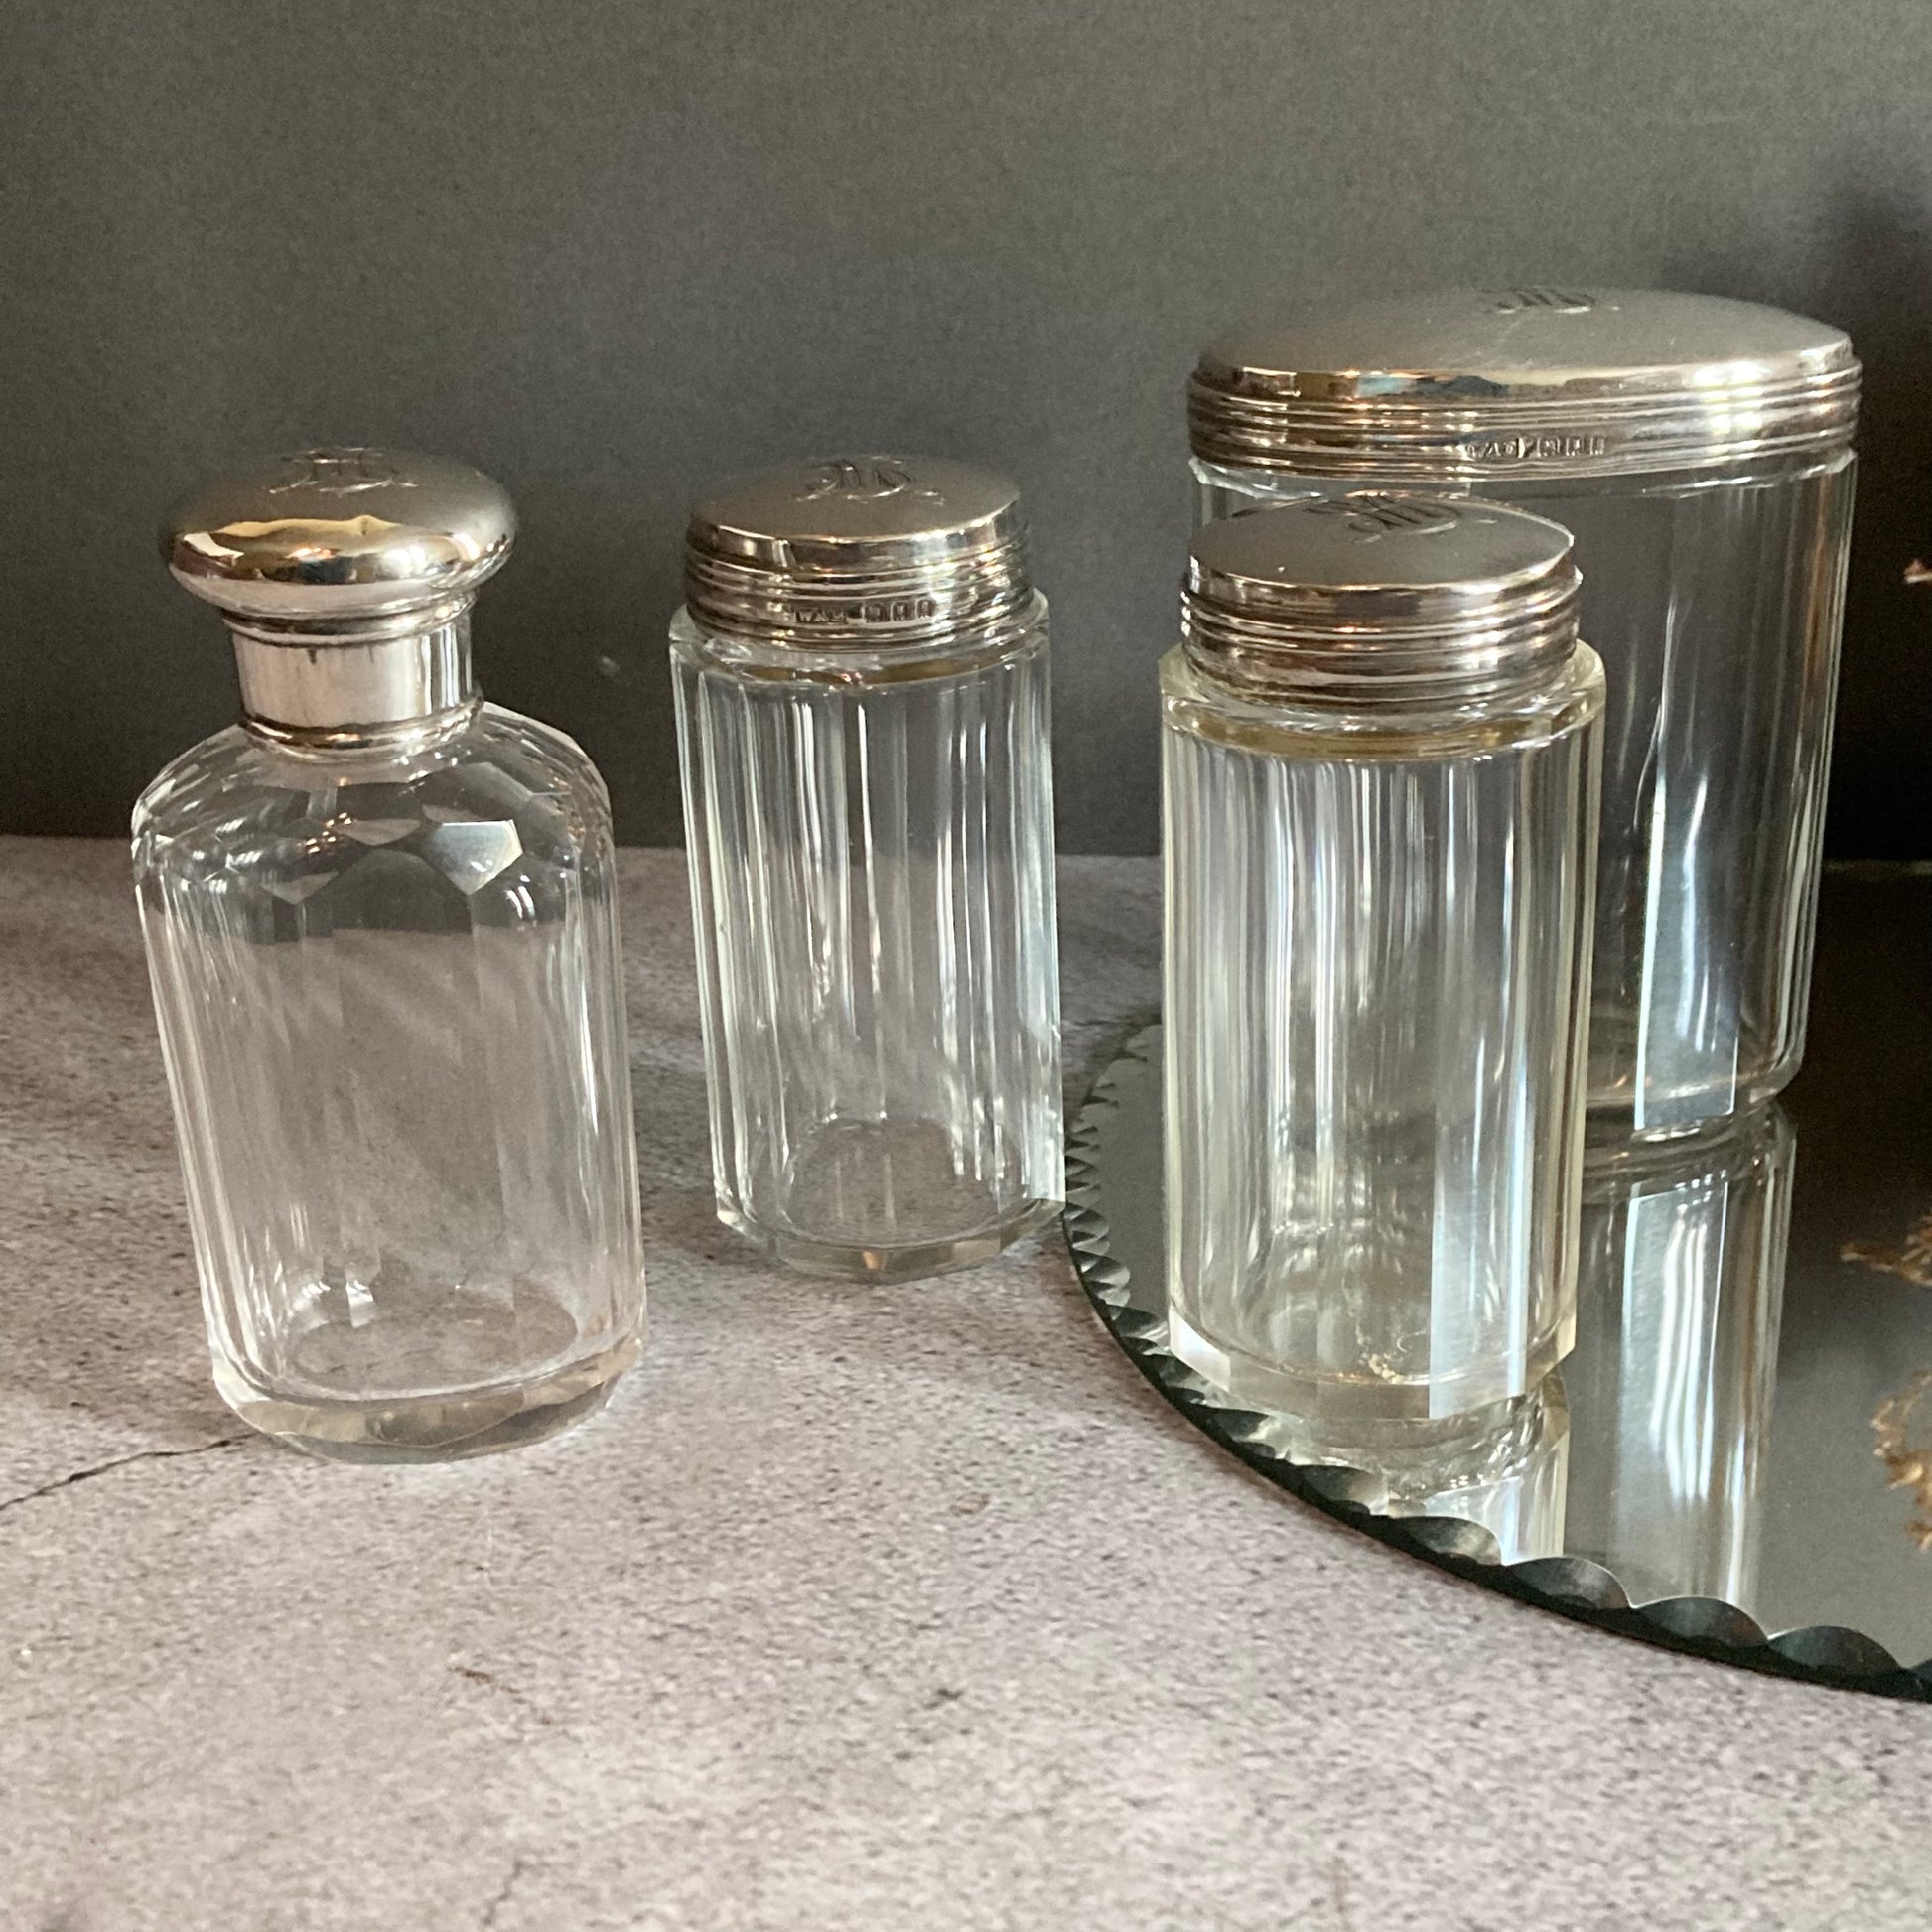 Antique Vanity Glass Jars. Solid Silver Lids. 1922 London